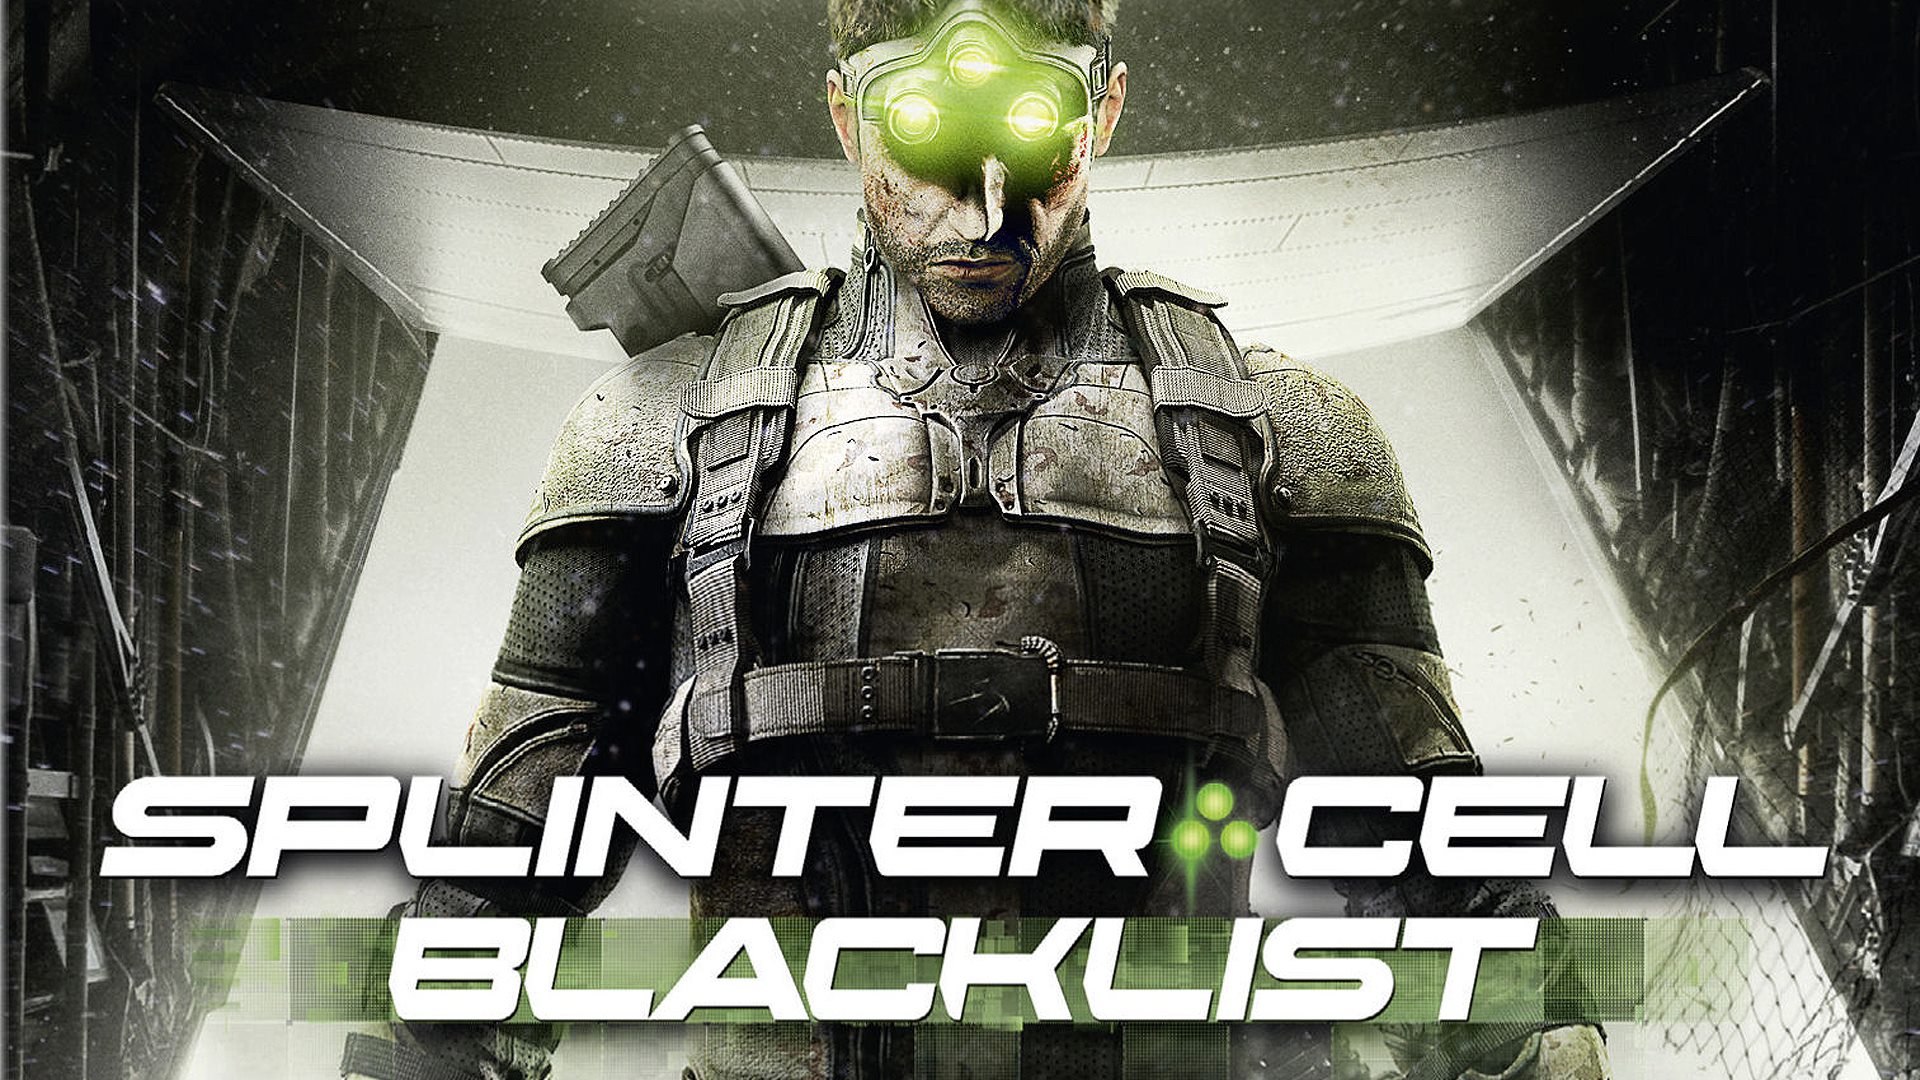 Сплинтер селл 1. Tom Clancy s Splinter Cell: Blacklist. Сэм Фишер Splinter Cell Blacklist. Tom Clancy s Splinter Cell: Blacklist обложка. Tom Clancy’s Splinter Cell: Blacklist геймплей.